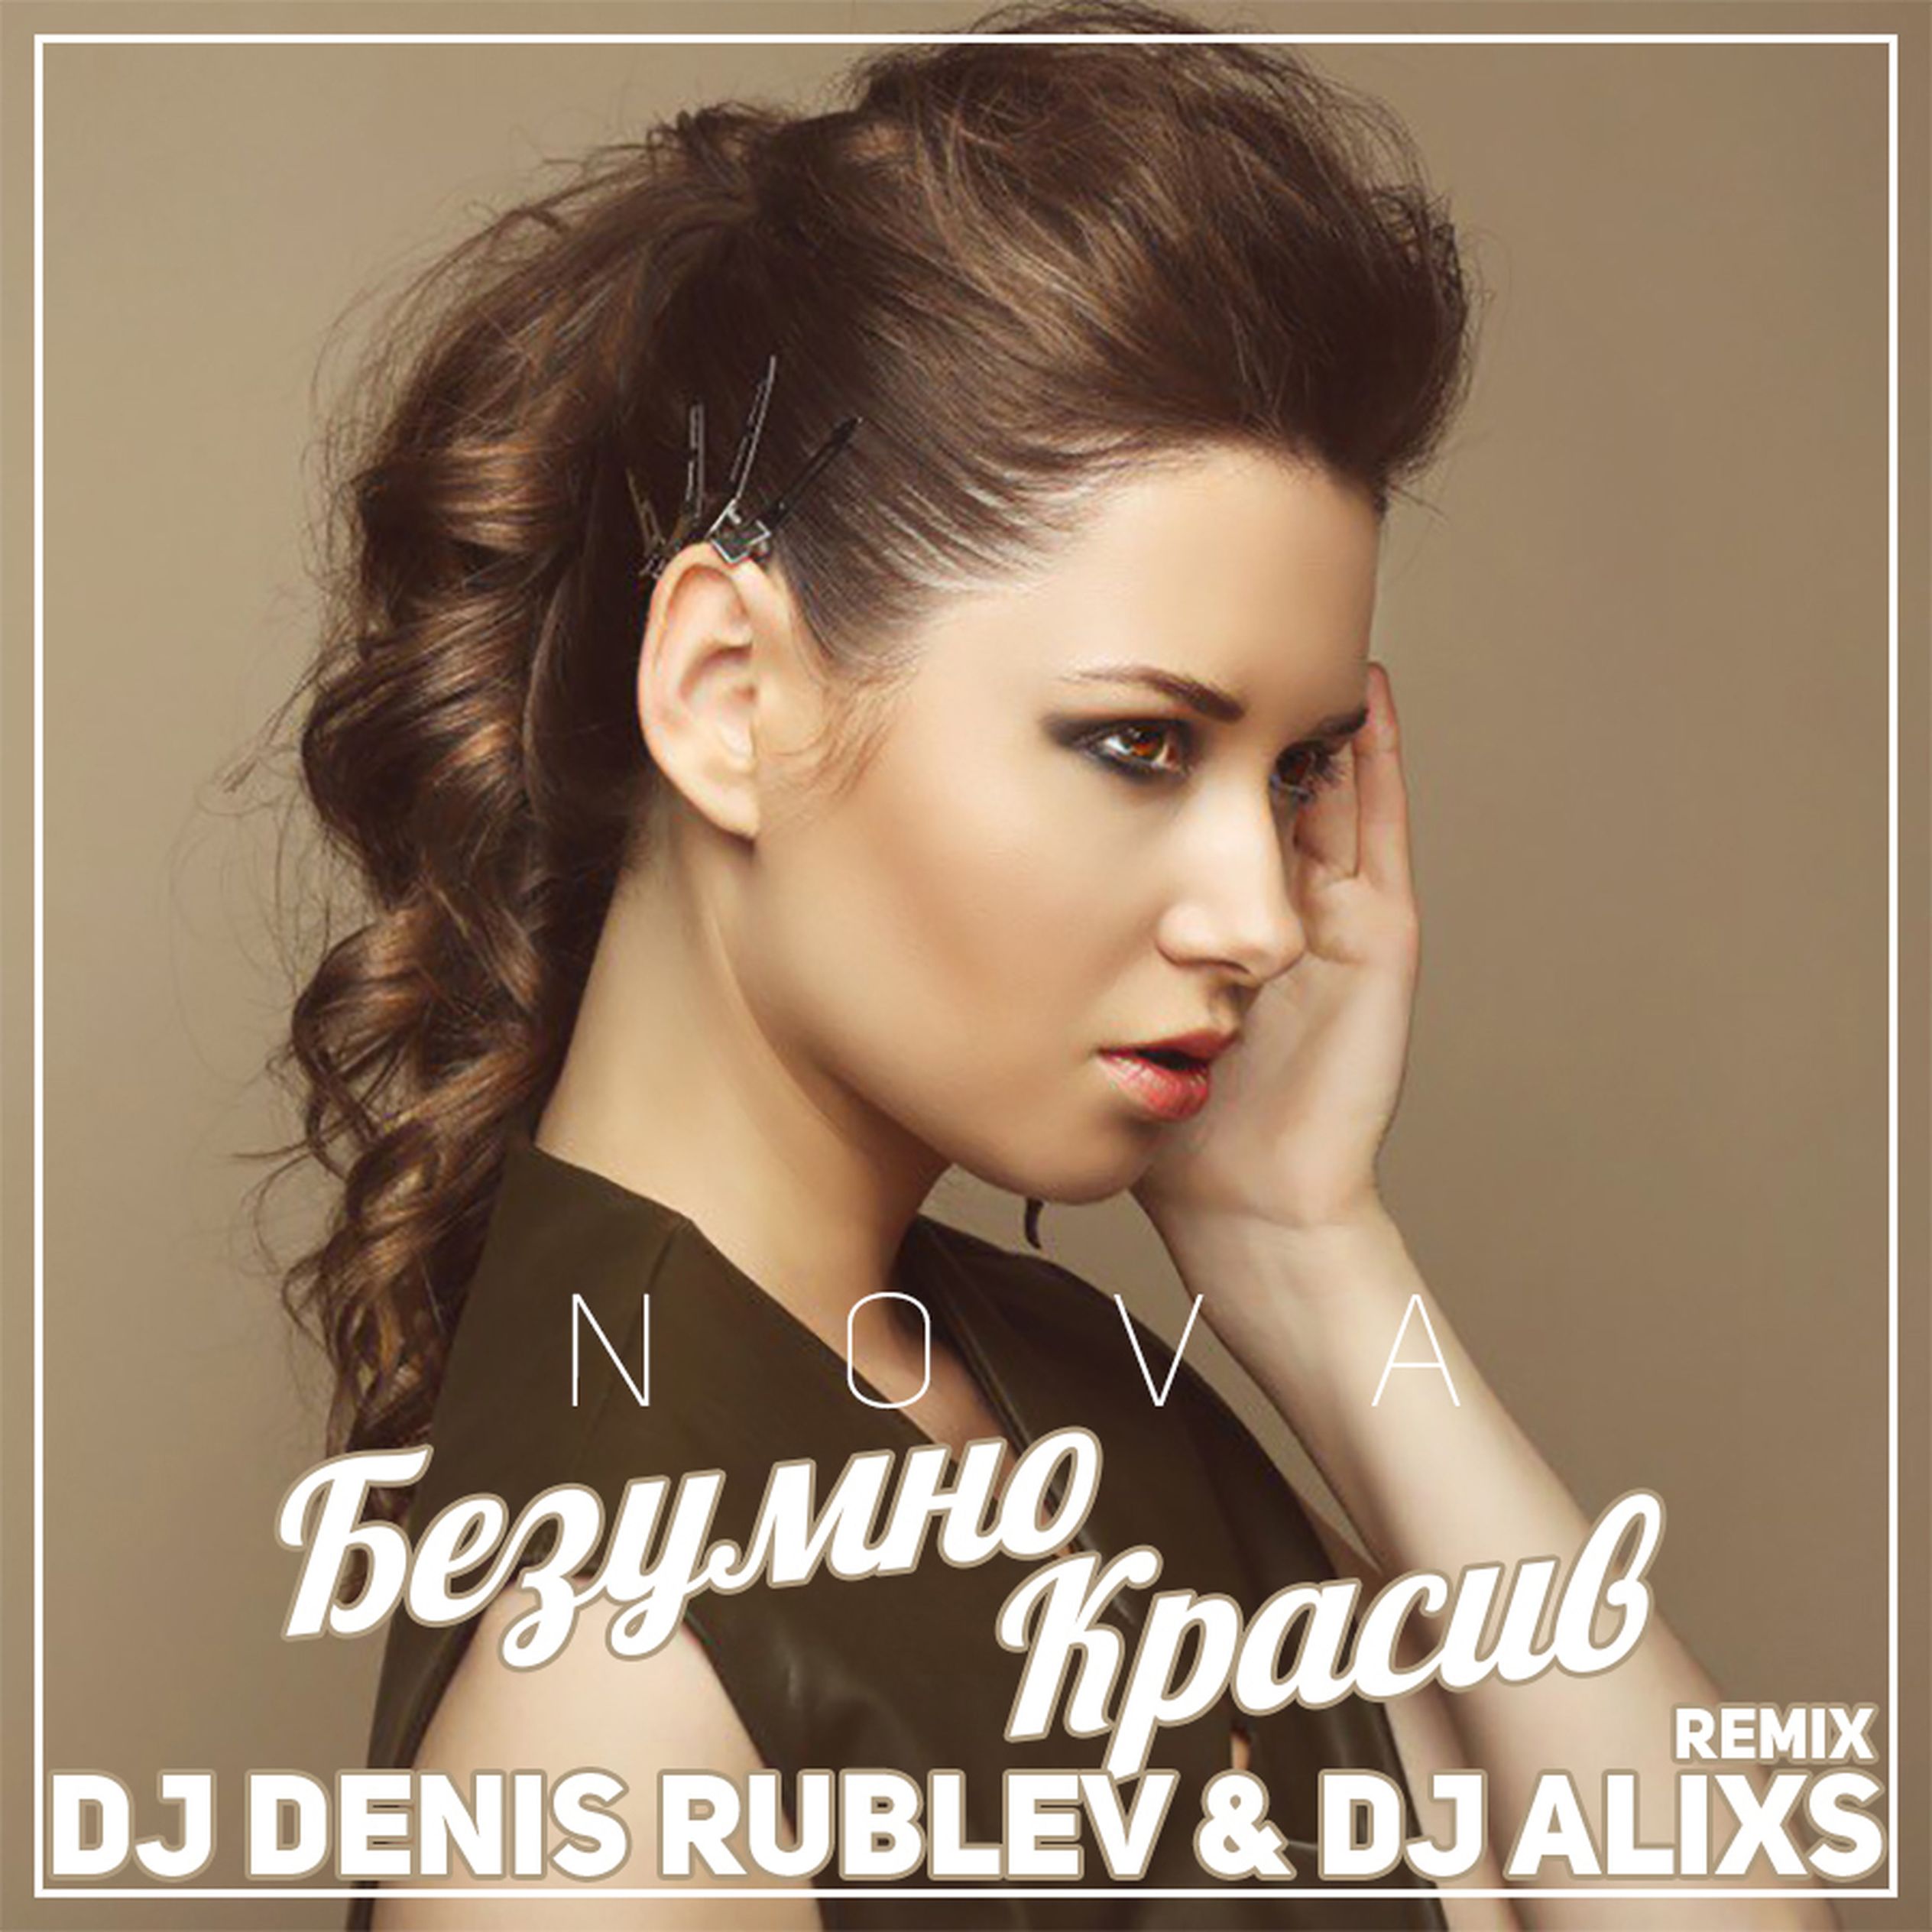 Nova-безумно красив. DJ Denis Rublev. Denis first Remix. DJ Denis Rublev - malchik moy Remix. Самая красивая ремикс песня